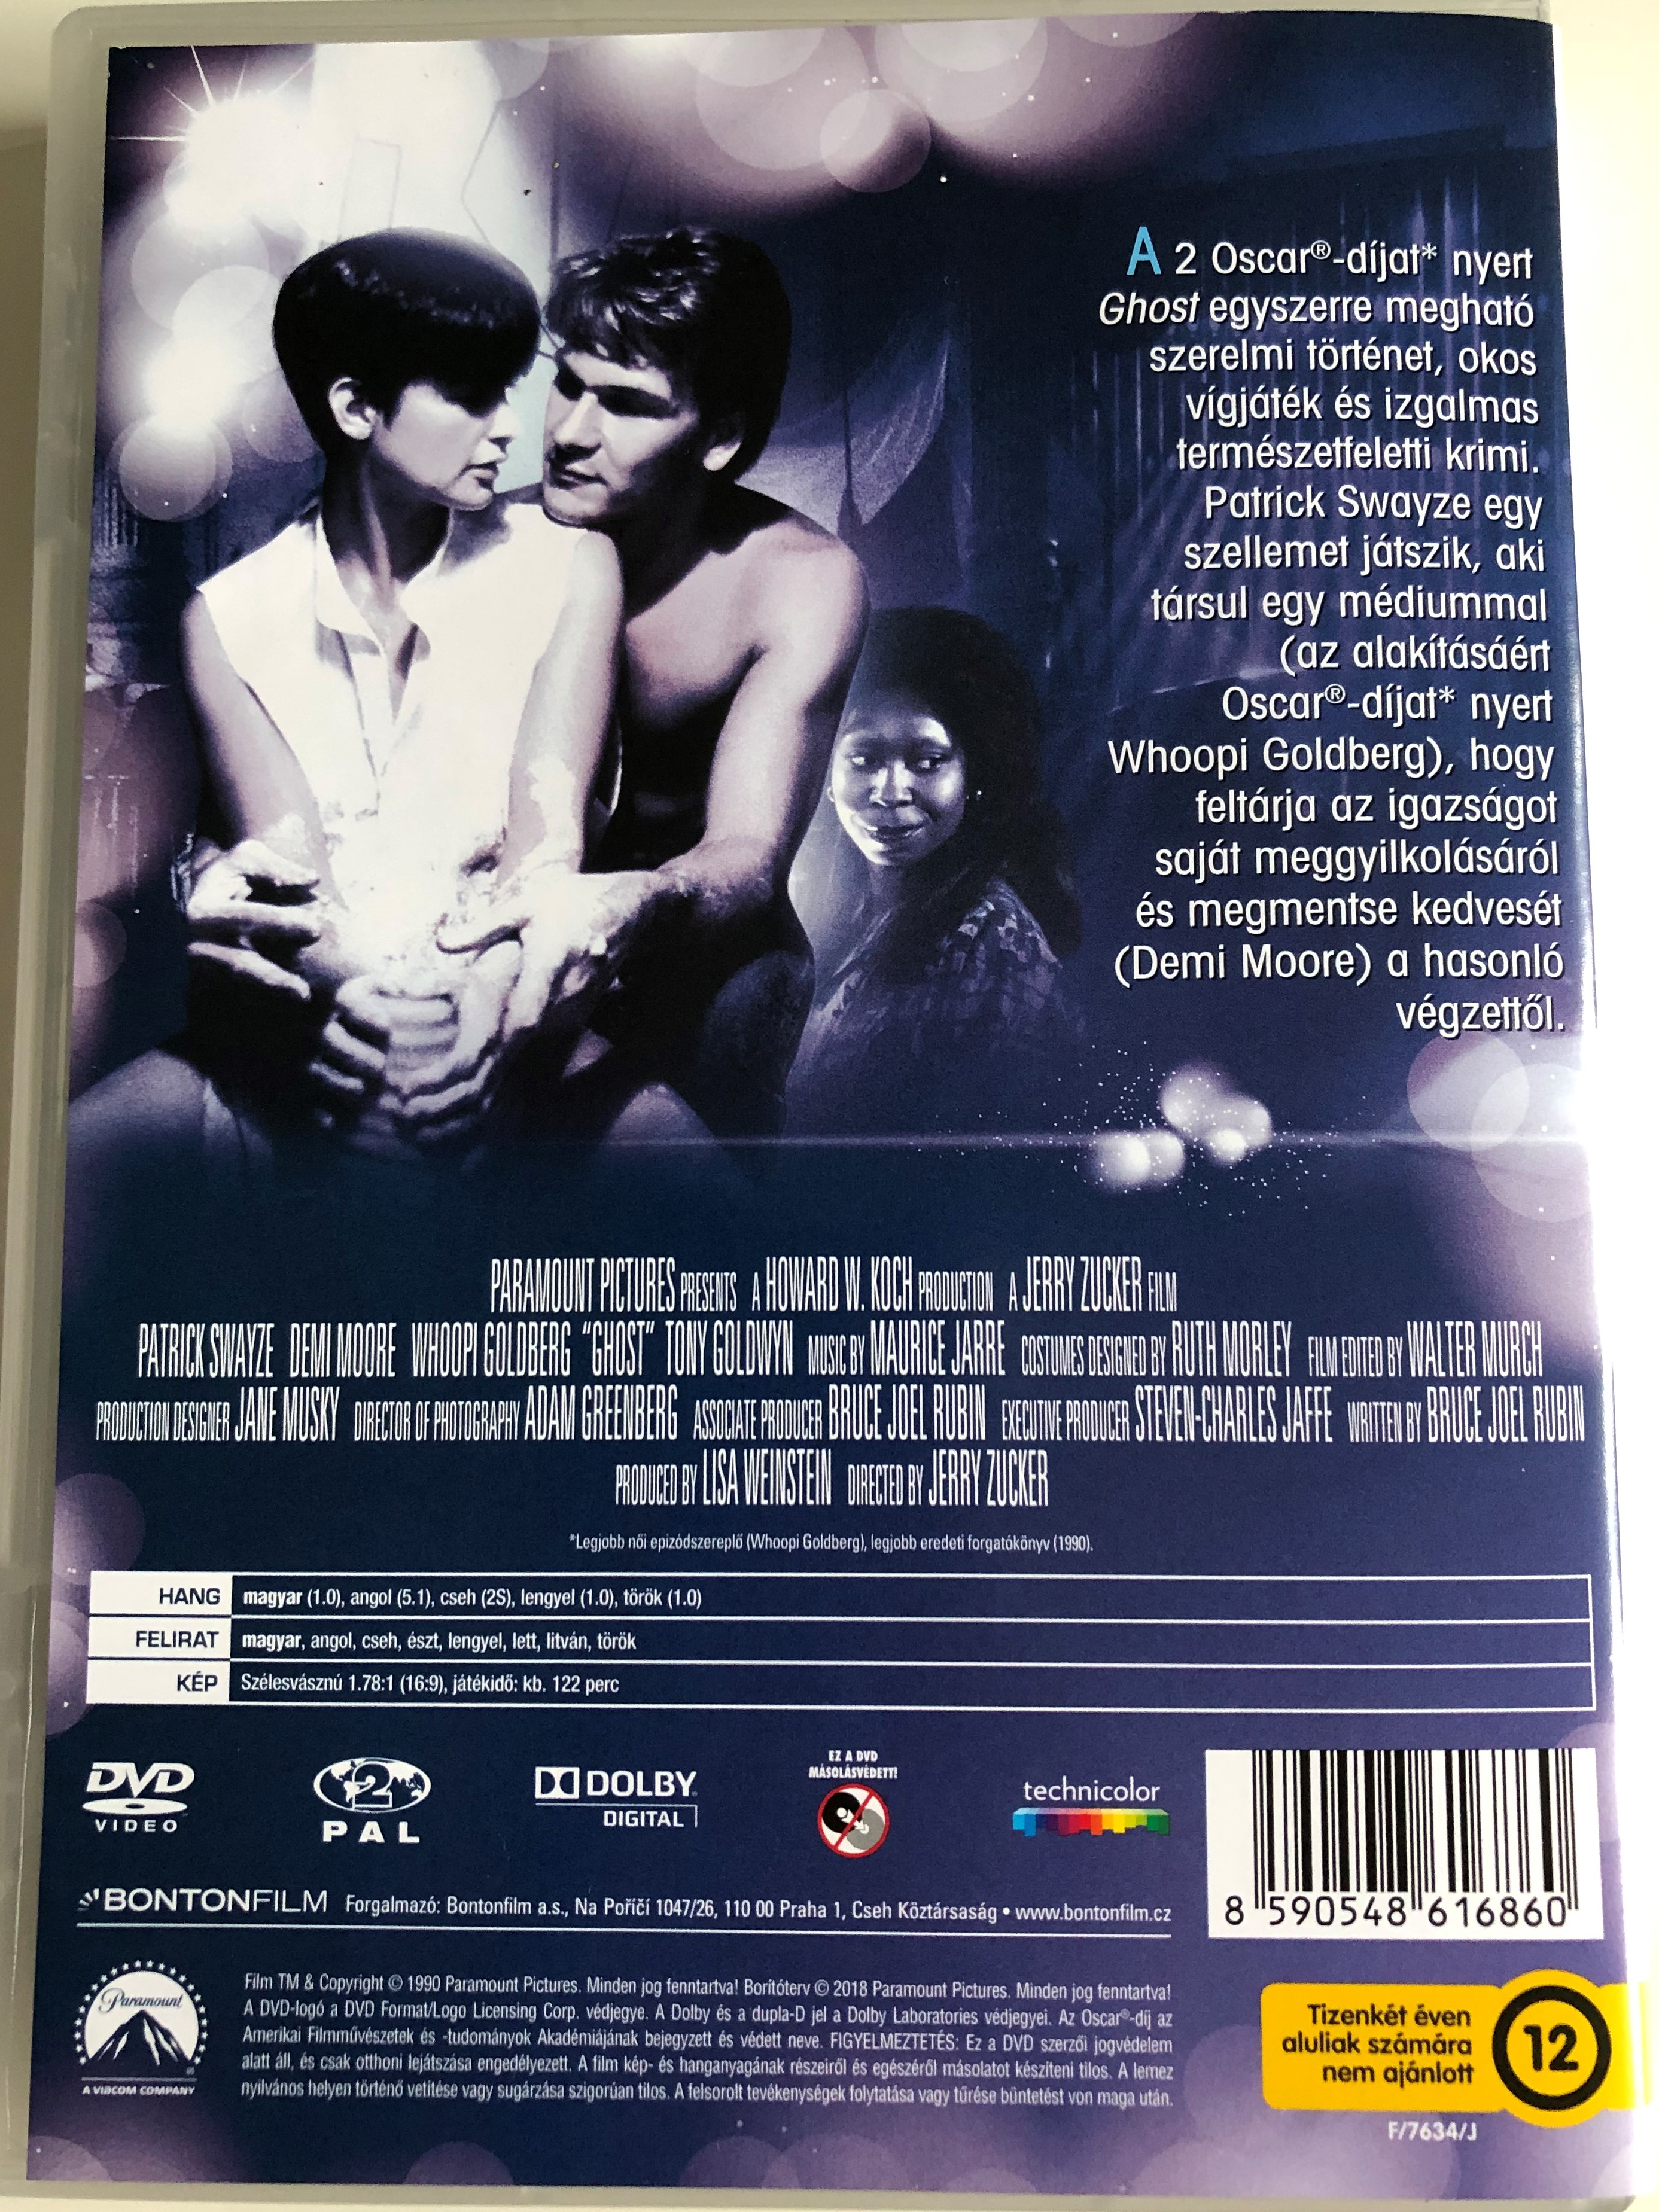 Ghost DVD 1990 Mas Alla del Amor / Directed by Jerry Zucker / Starring:  Patrick Swayze, Demi Moore, Whoopi Goldberg, Tony Goldwyn -  bibleinmylanguage